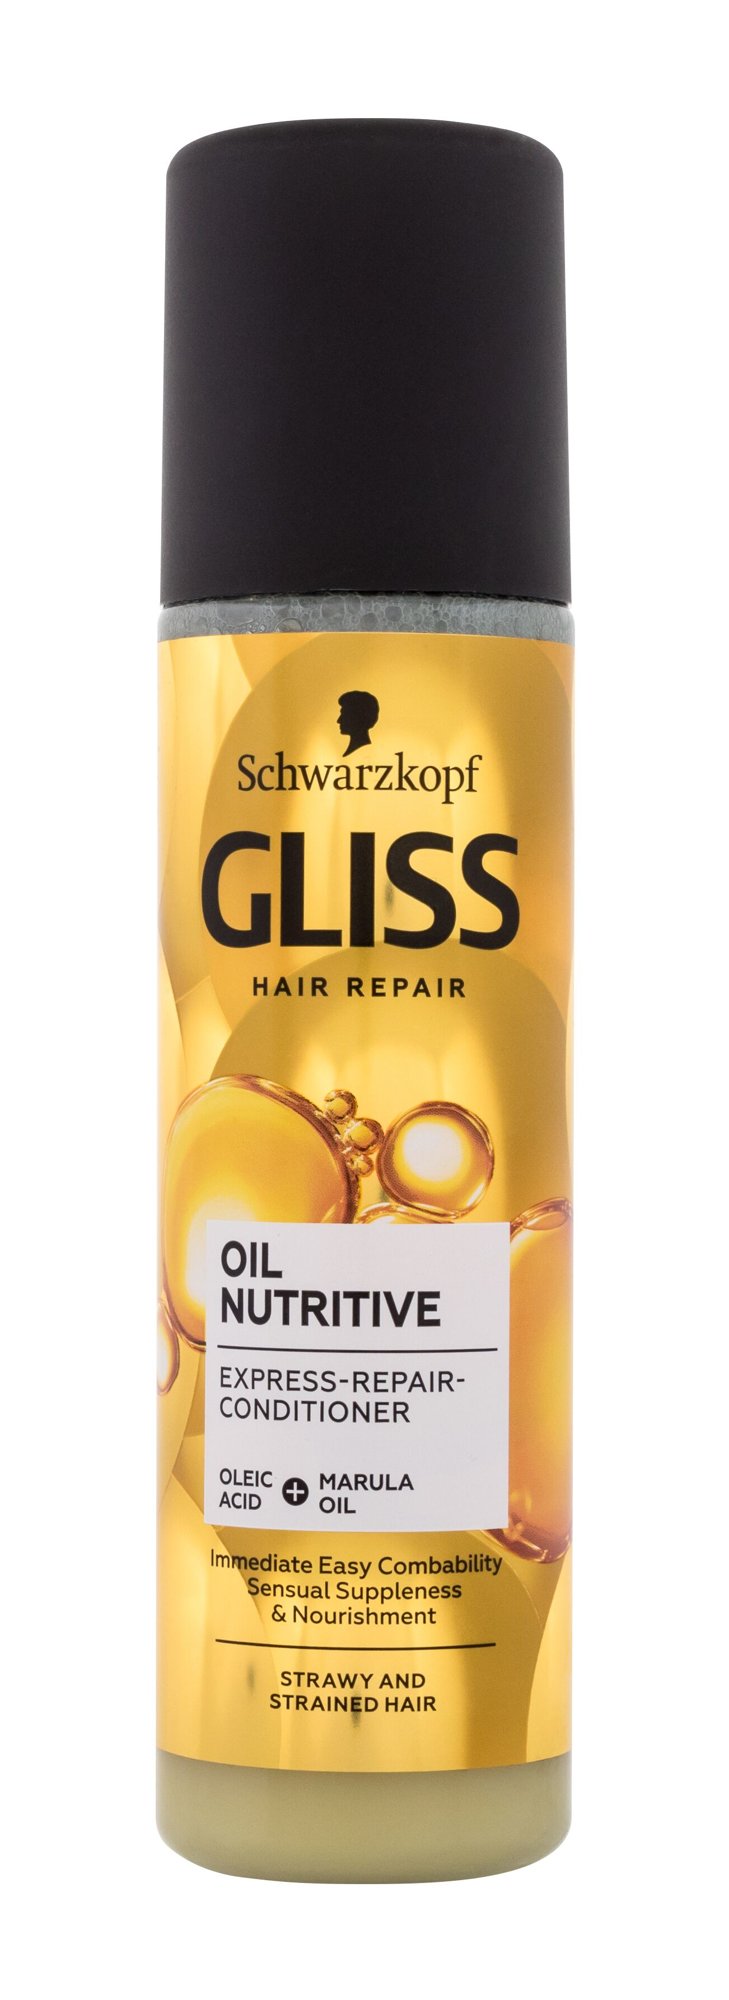 Schwarzkopf  Gliss Kur Oil Nutritive Express-Repair-Conditioner kondicionierius